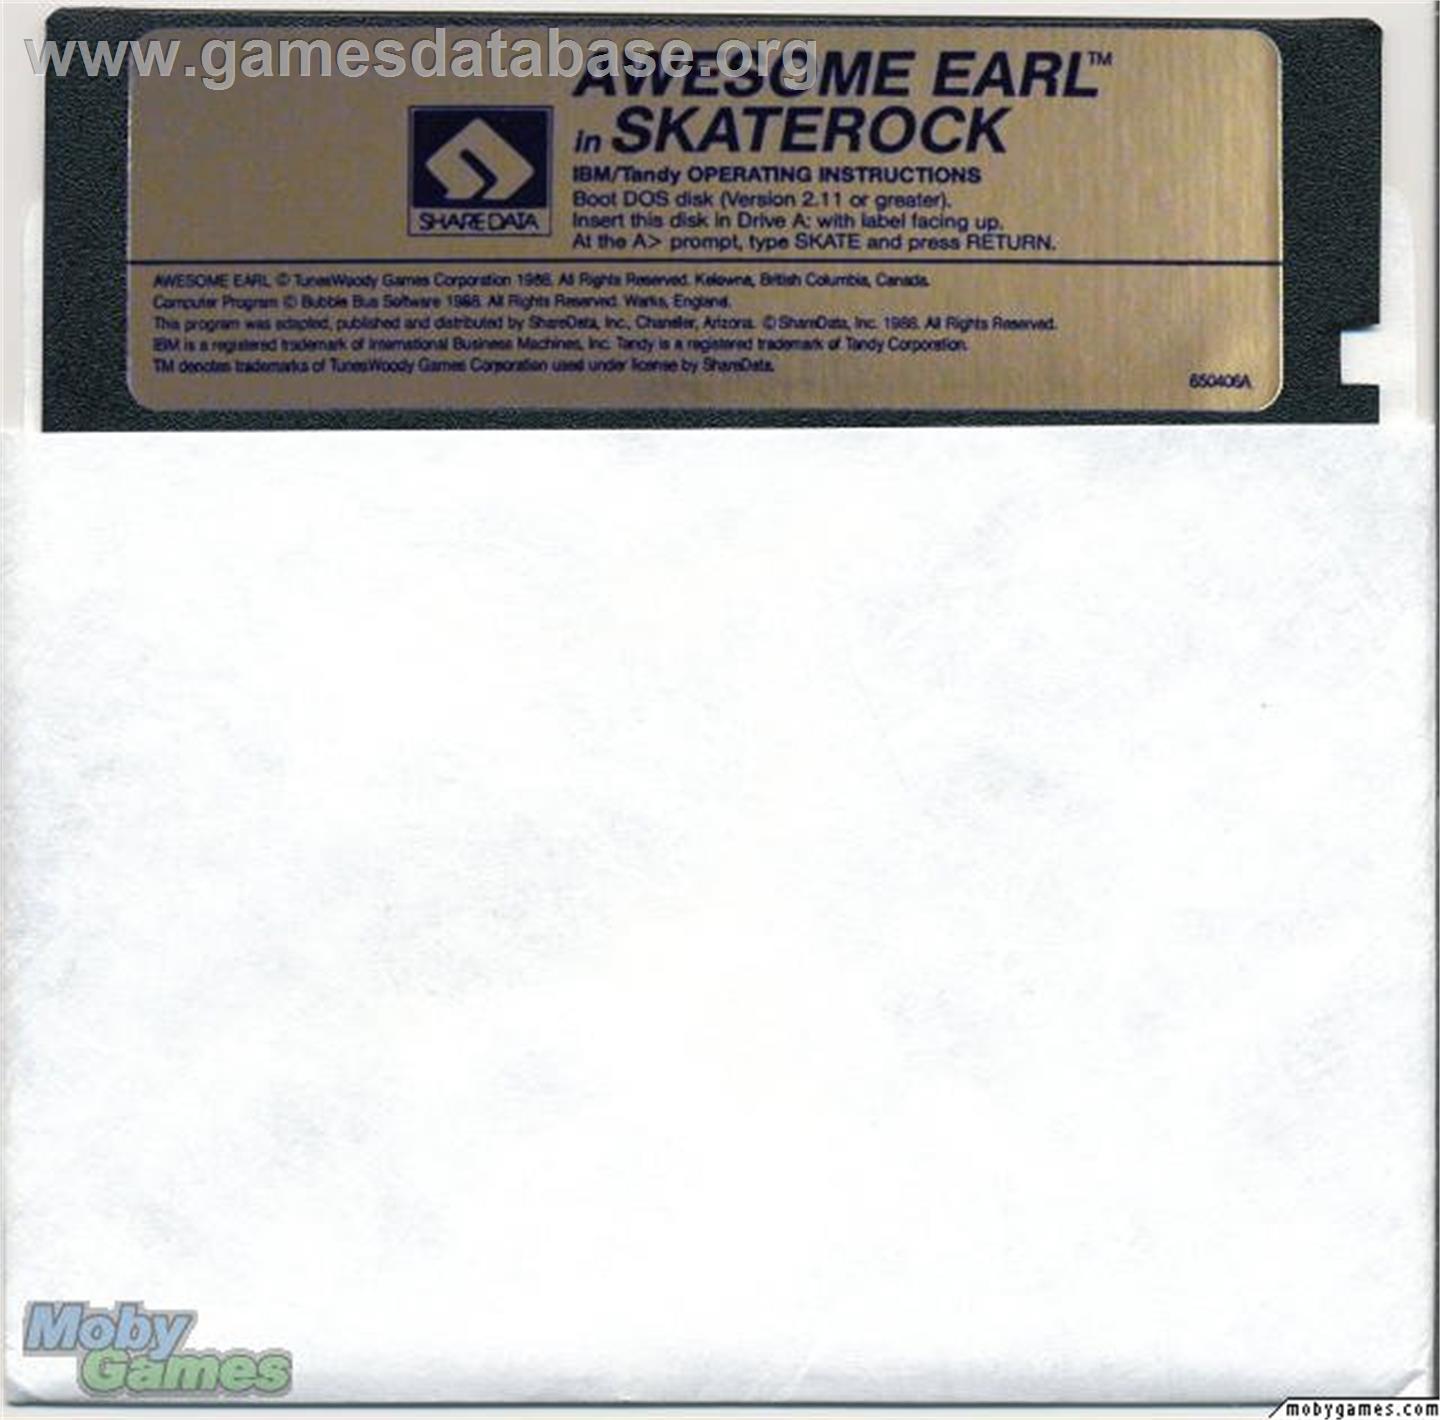 Awesome Earl in SkateRock - Microsoft DOS - Artwork - Disc